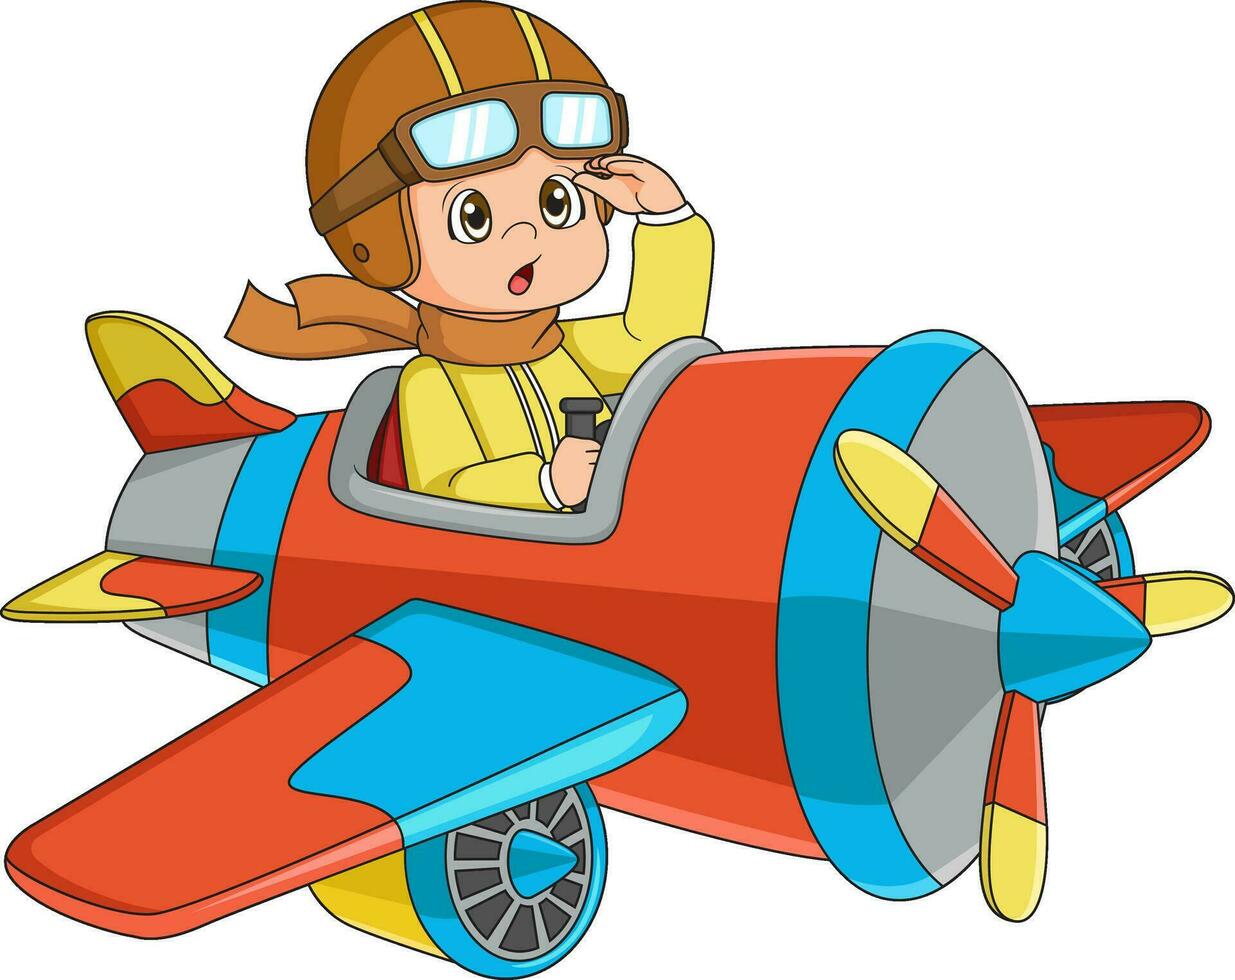 niño pequeño de dibujos animados operando un avión vector